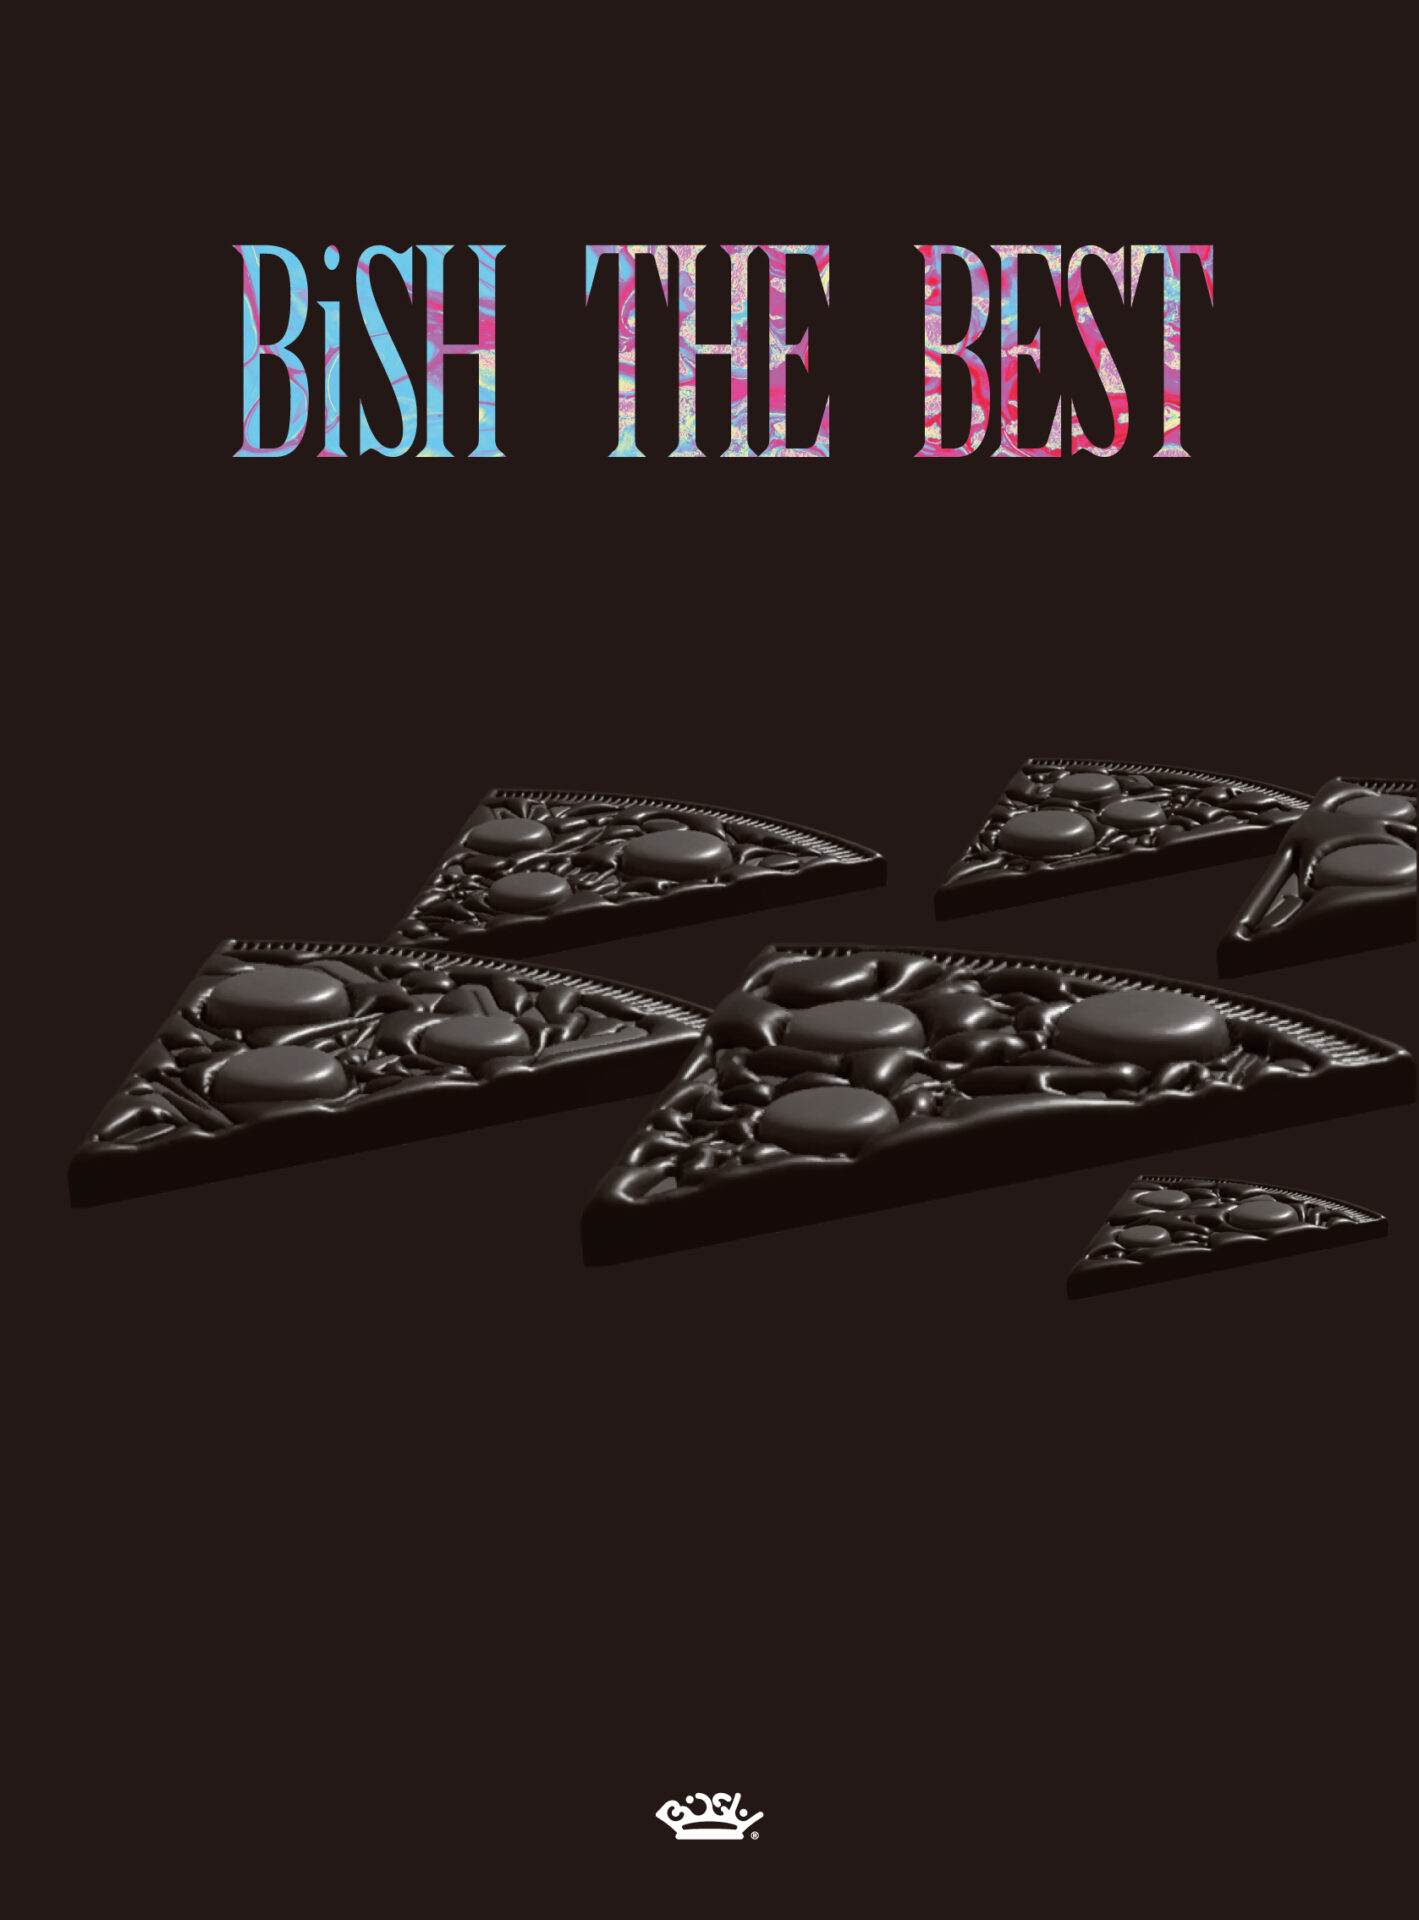 『BiSH THE BEST』Blu-ray盤ジャケット